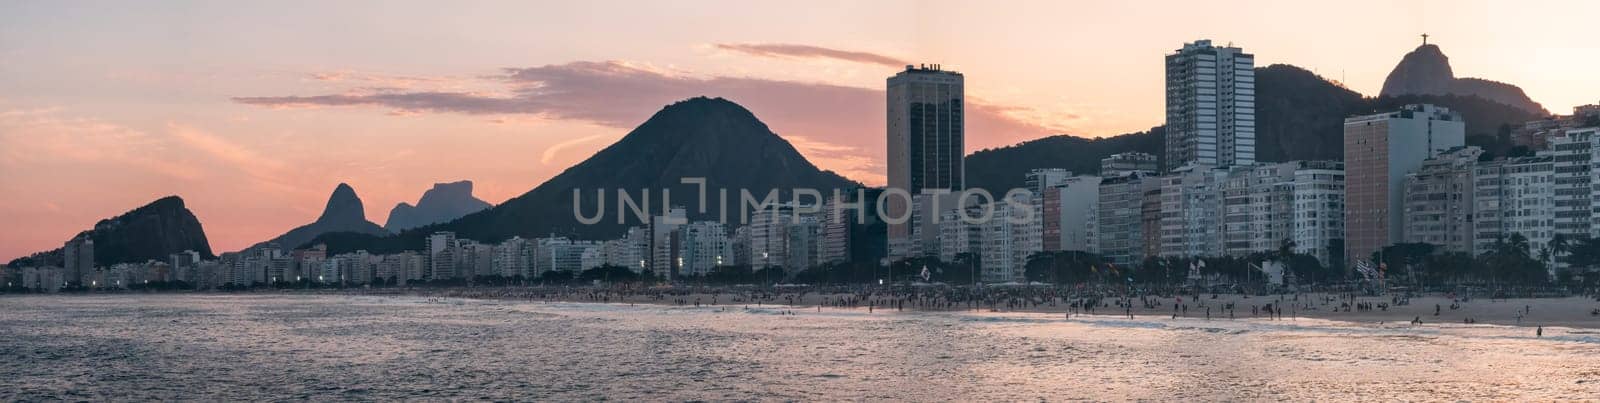 Golden Dusk Over Copacabana Beach with Rio Landmarks Silhouettes by FerradalFCG